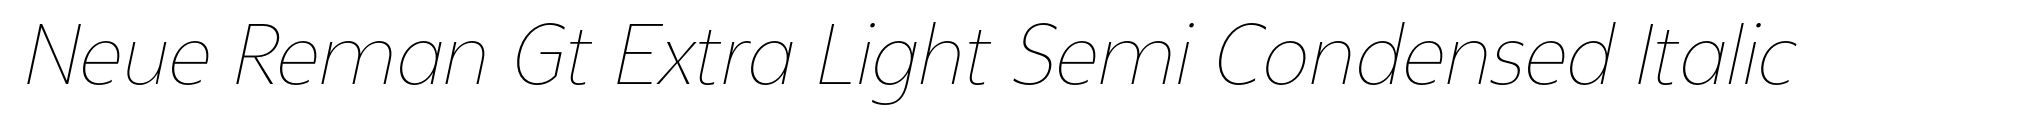 Neue Reman Gt Extra Light Semi Condensed Italic image